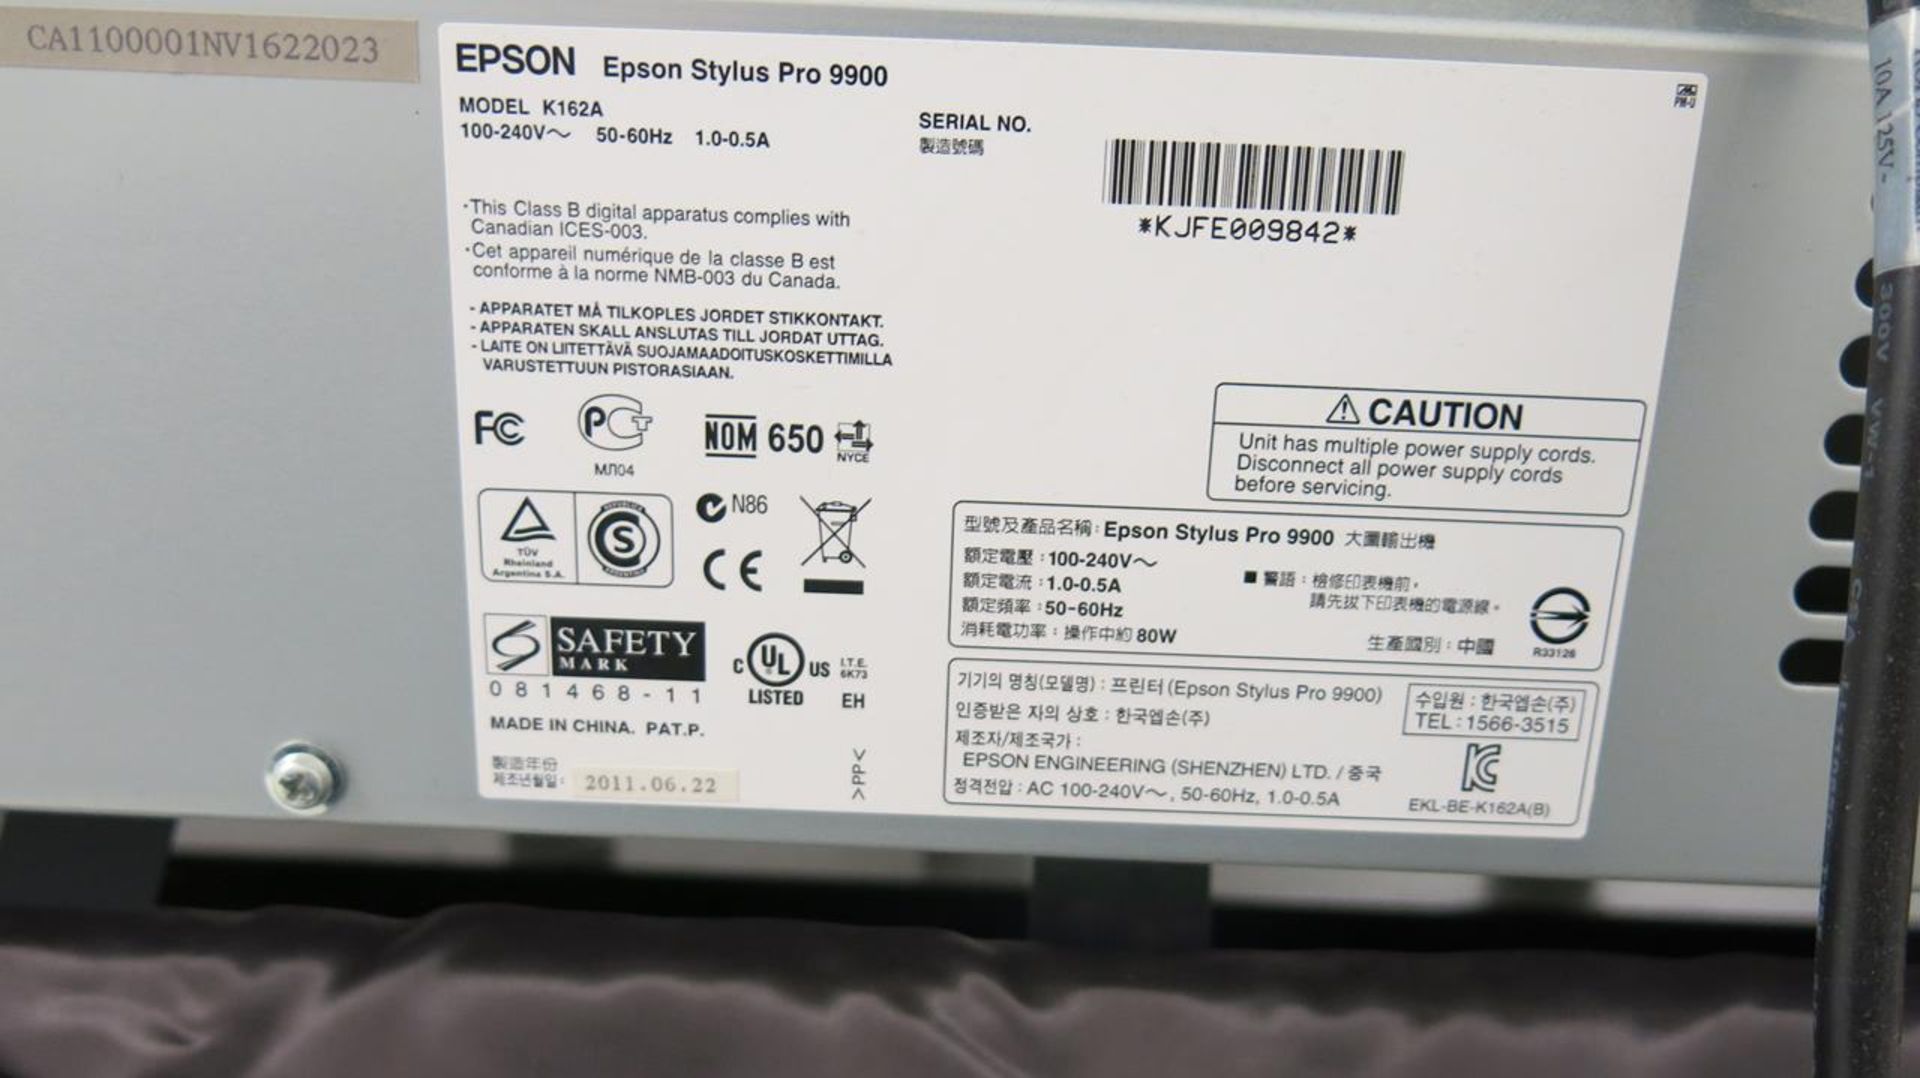 EPSON, STYLUS PRO 9900, K162A, LARGE FORMAT PRINTER, S/N KJFE009842, 2011 - Image 3 of 3